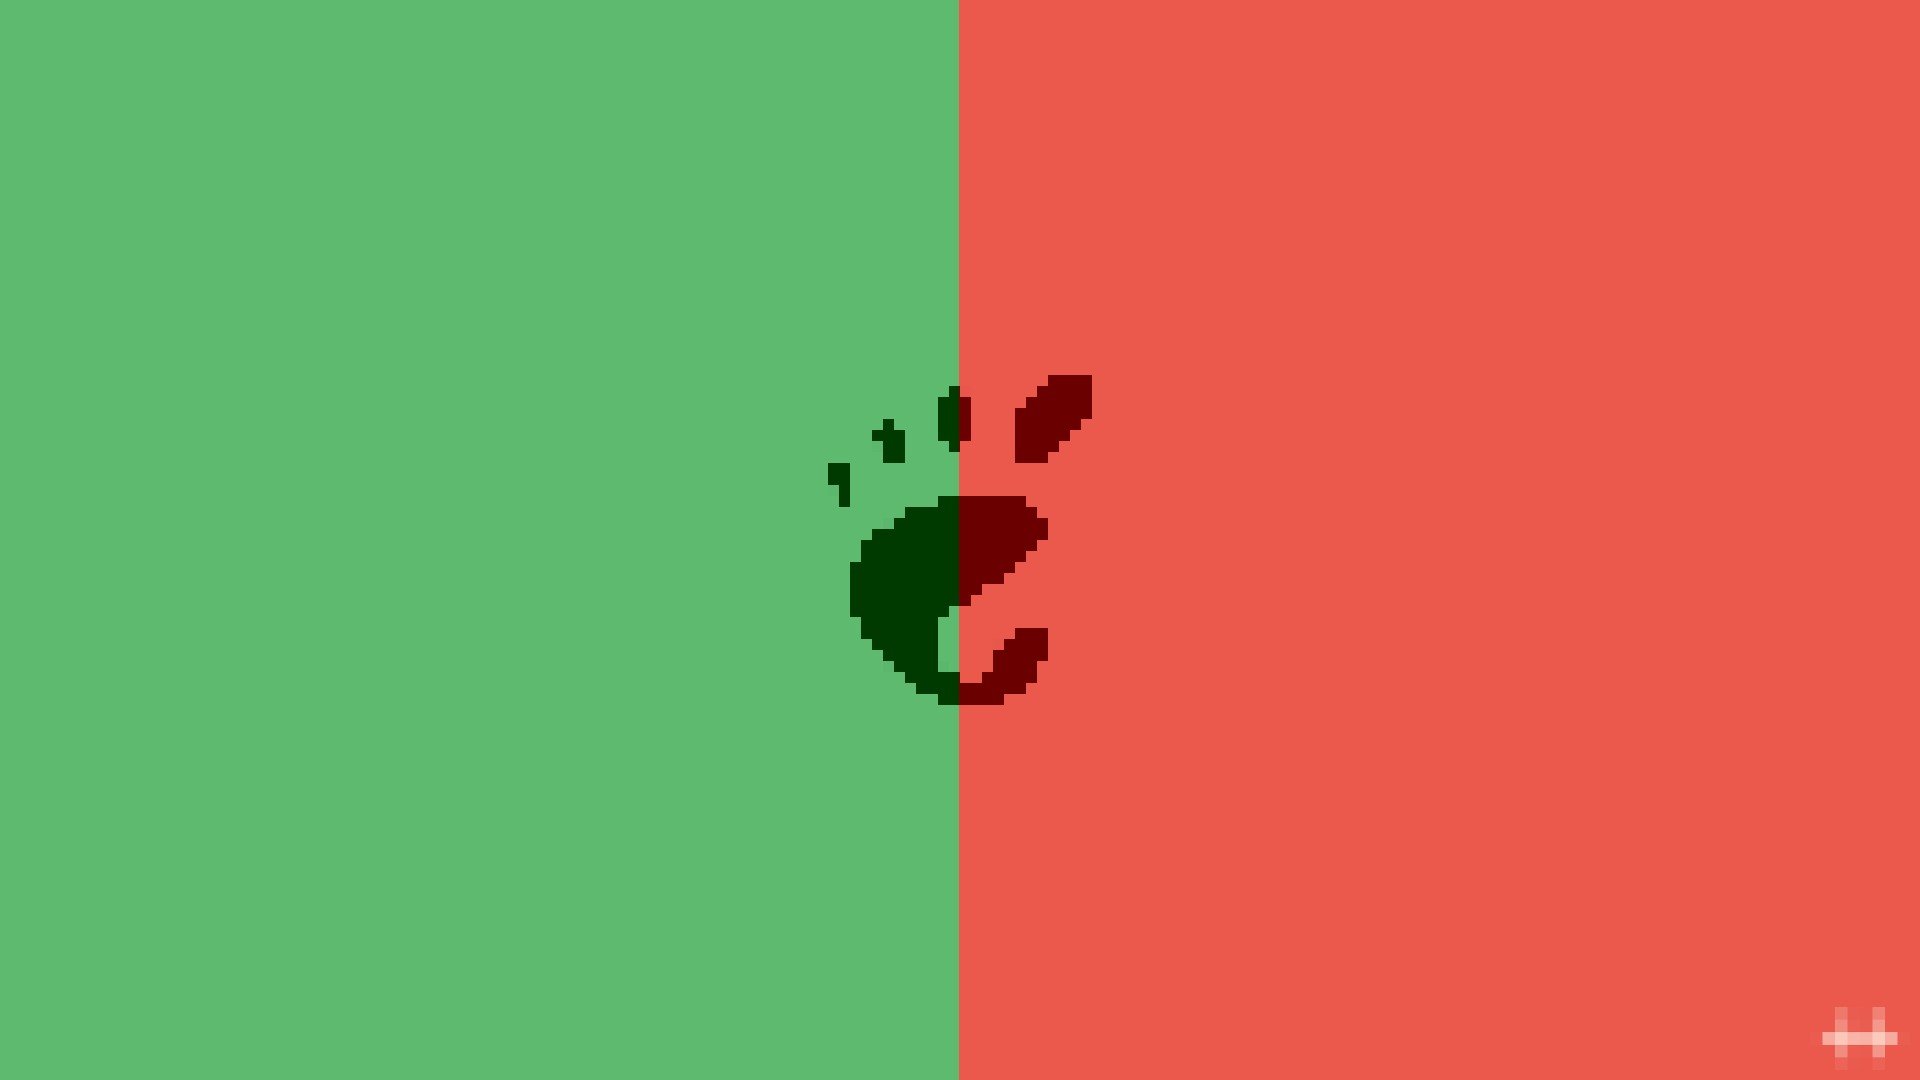 Linux, Green, Red, Computer, Minimalism, Pixel art, GNOME Wallpaper